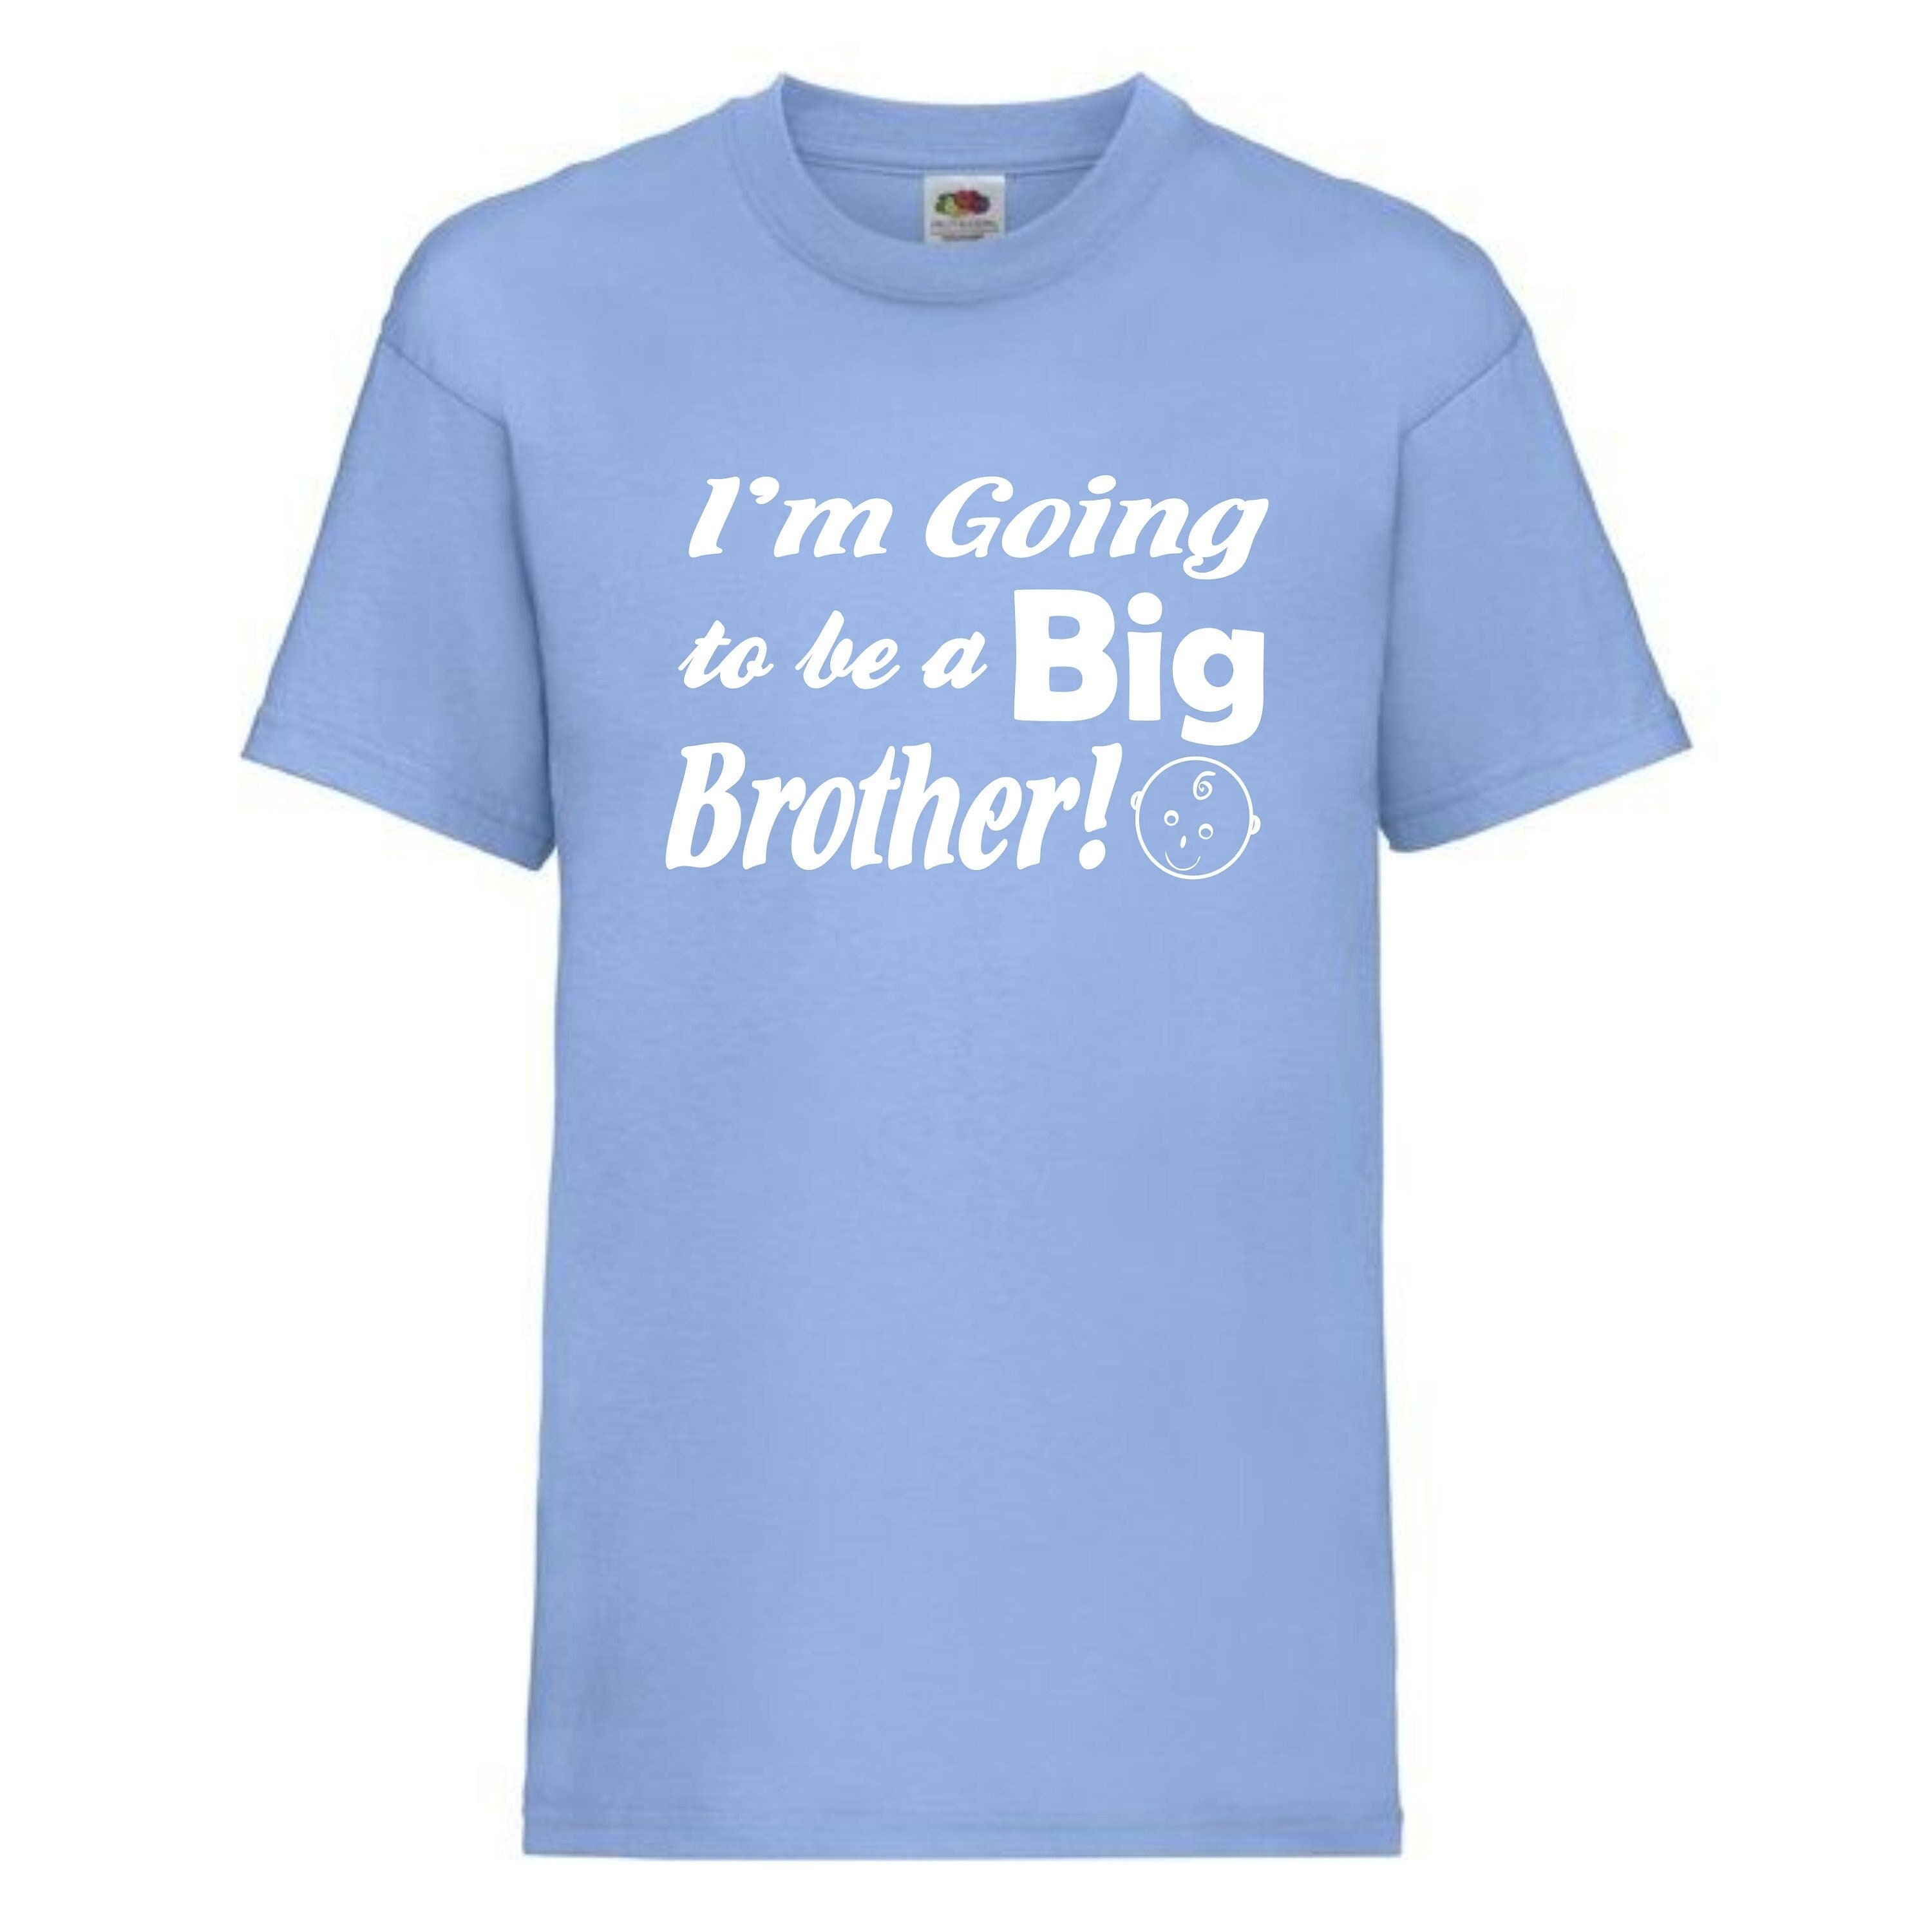 Camiseta voy a ser hermano mayor - Estampatya